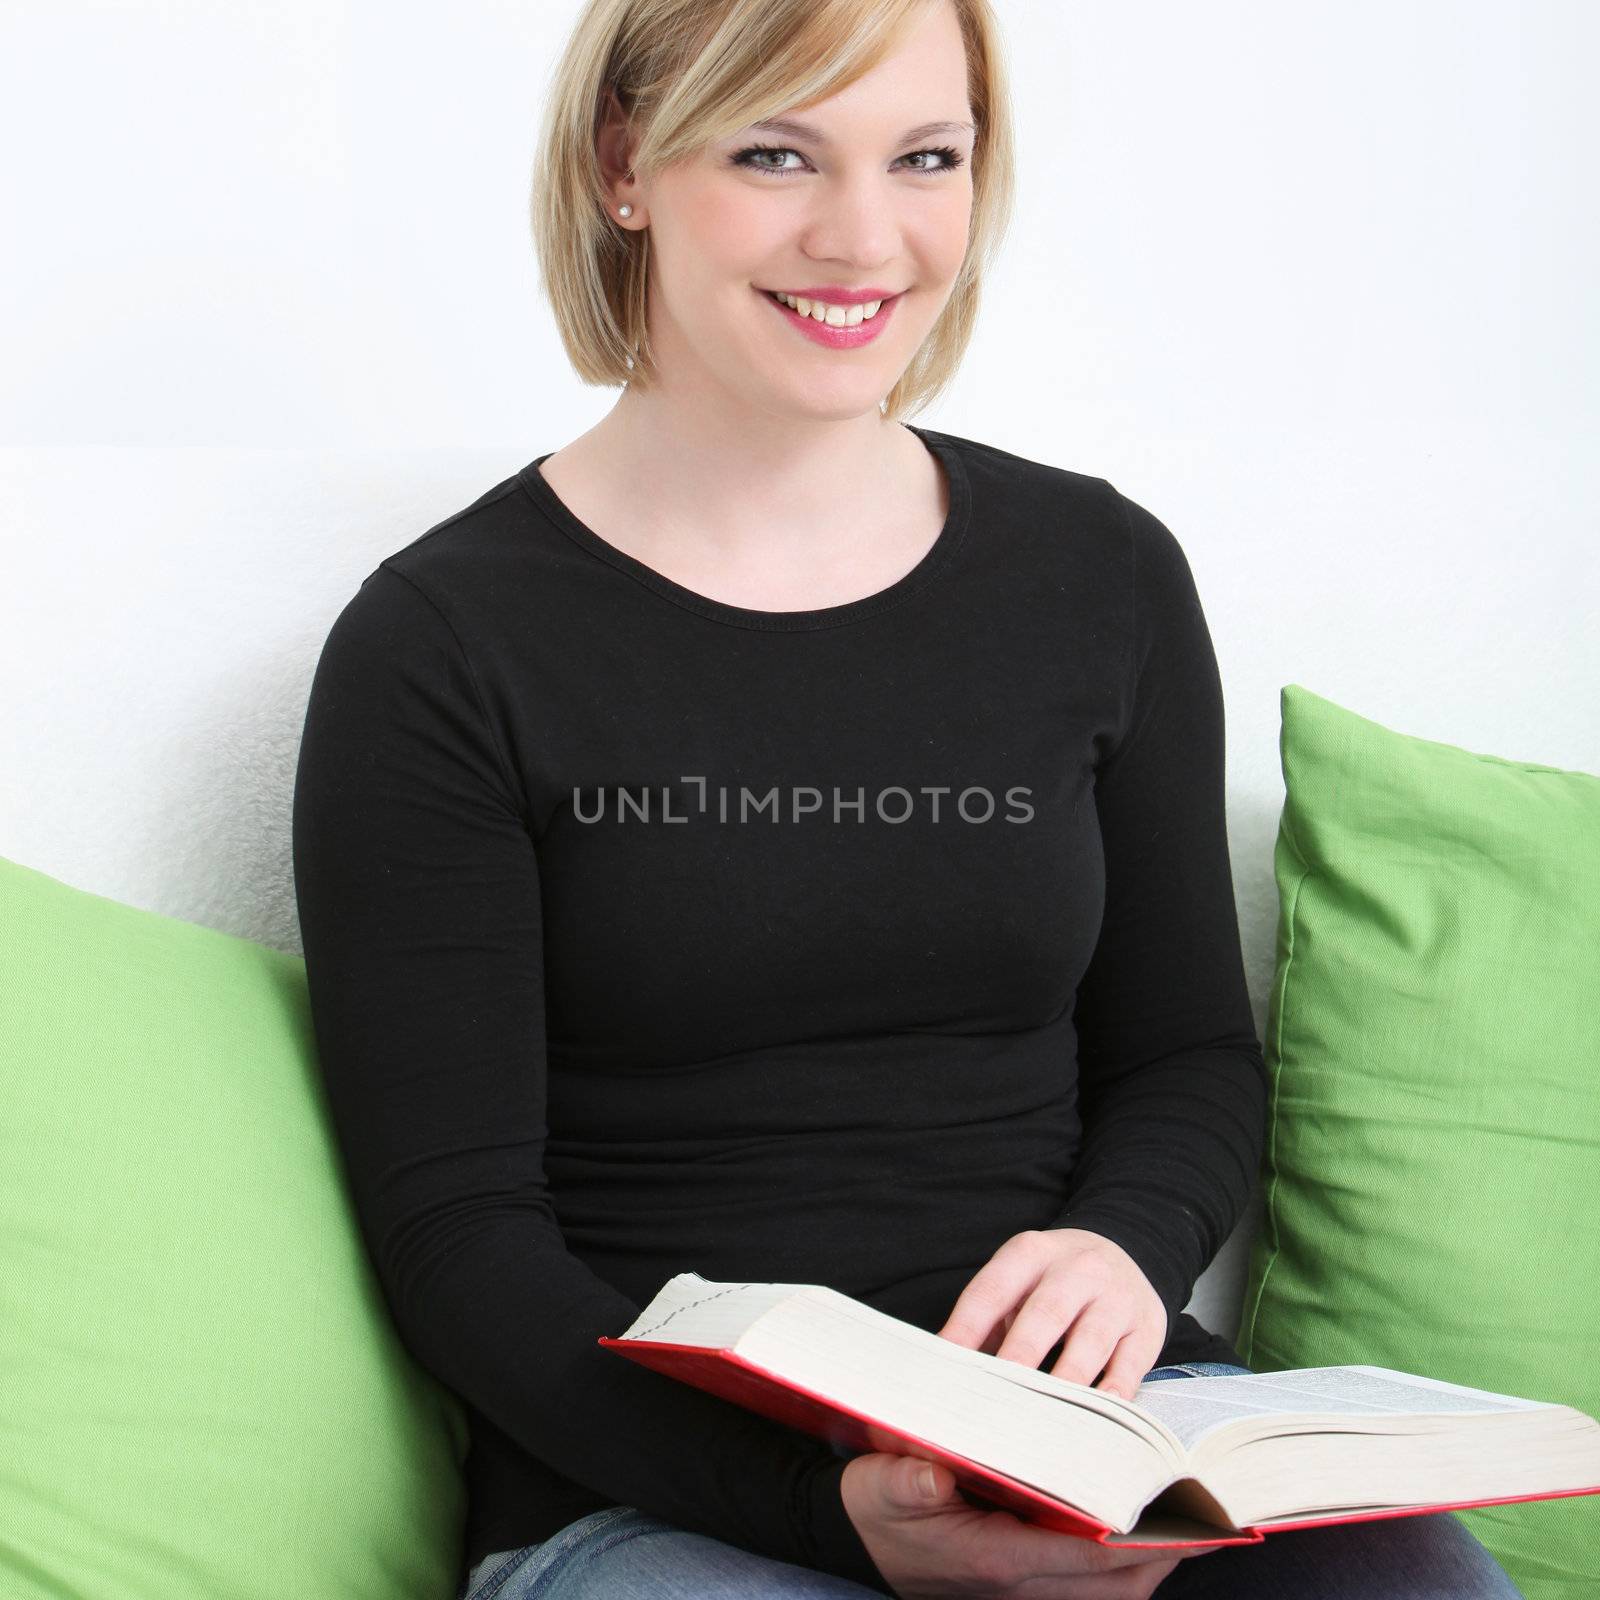 Smiling woman enjoying her book by Farina6000